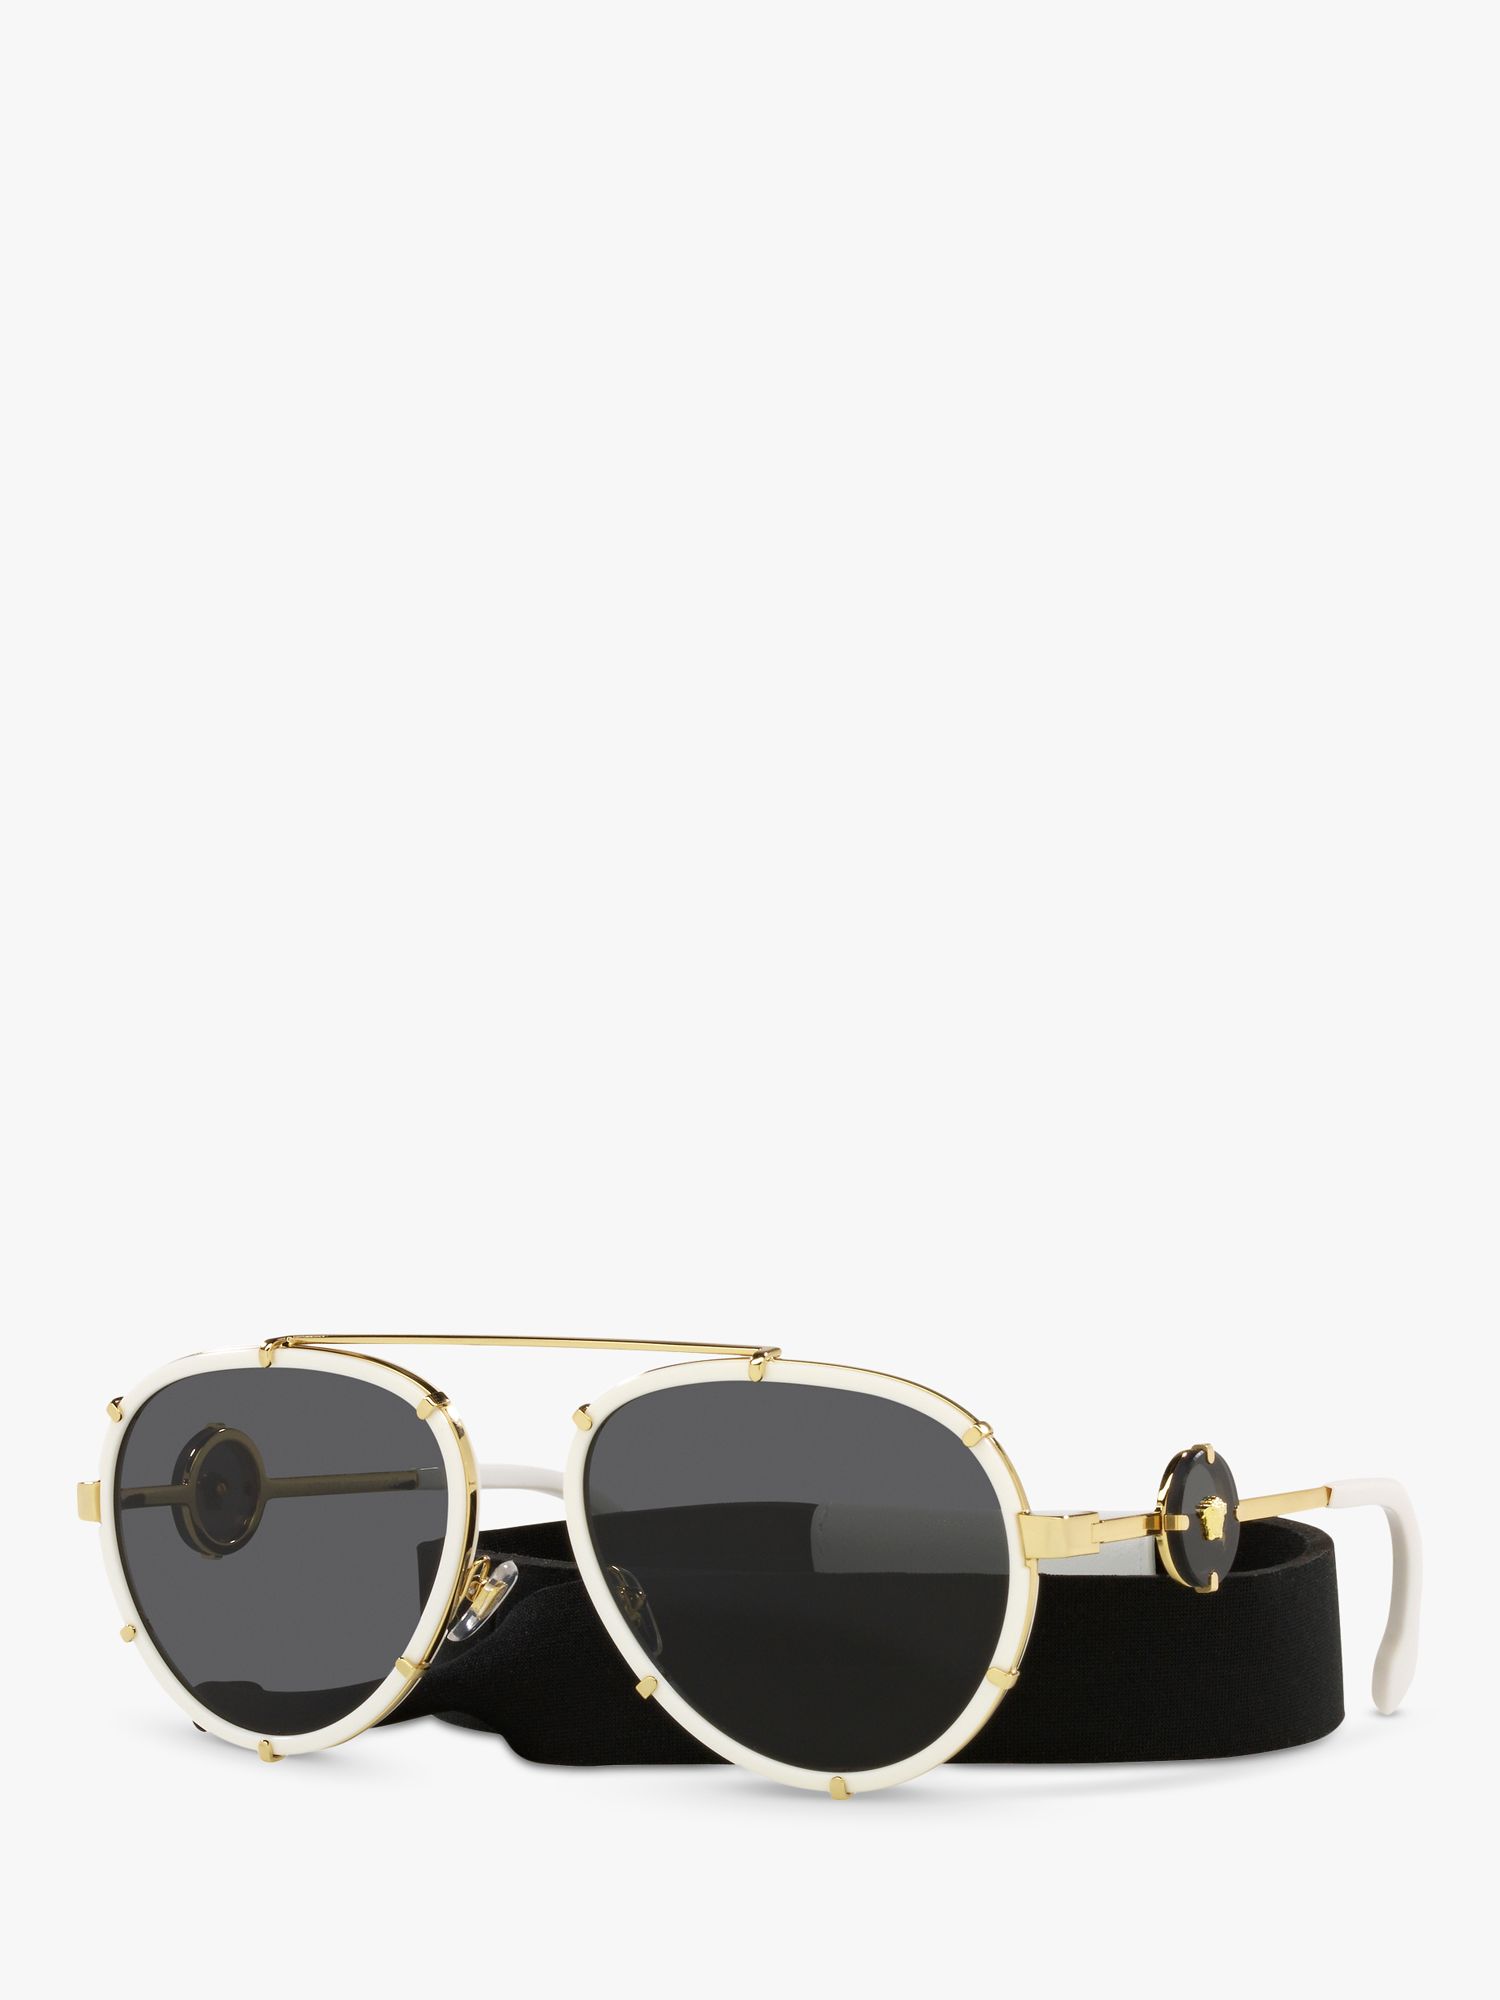 Buy Versace VE2232 Women's Aviator Sunglasses, White on Gold/Black Online at johnlewis.com